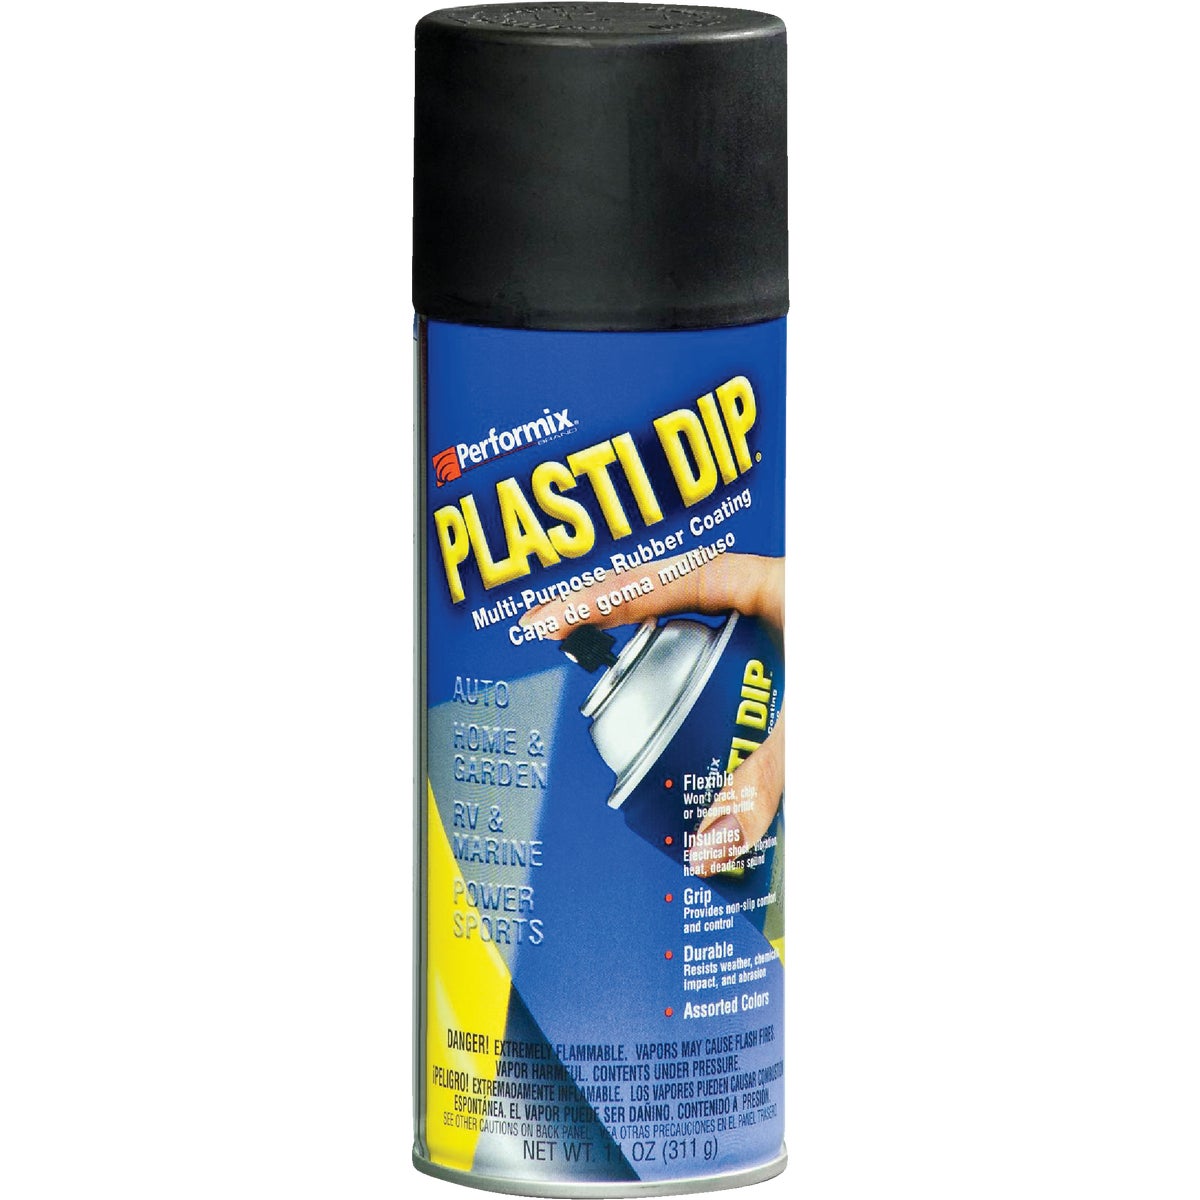 Performix Plasti Dip Black 11 Oz. Aerosol Rubber Coating Rubber Coating Spray Paint